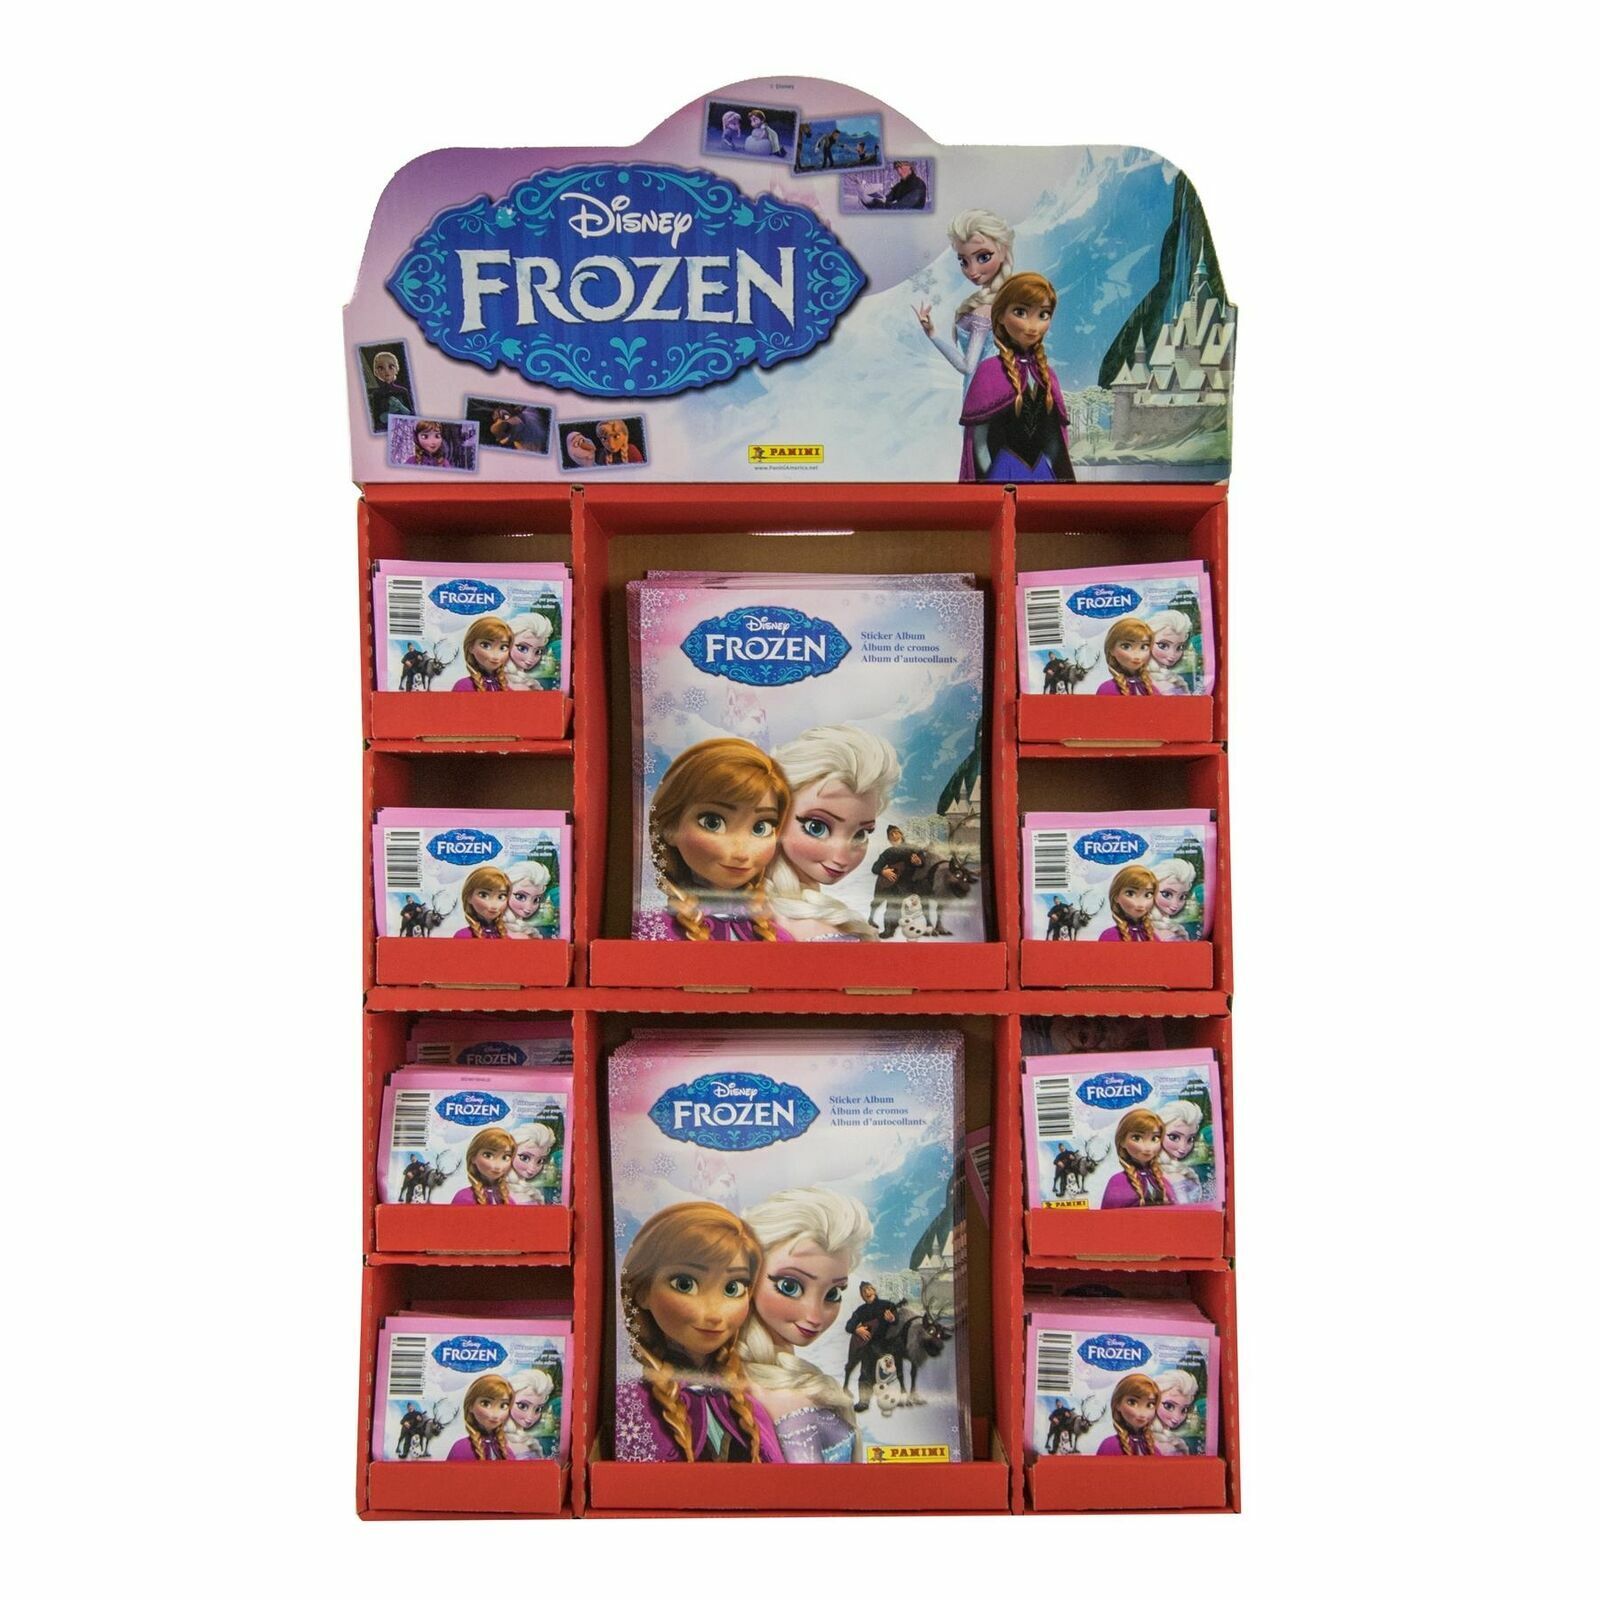 Panini Disney Frozen Sticker Floor Display Case With Over 2,100 Stickers